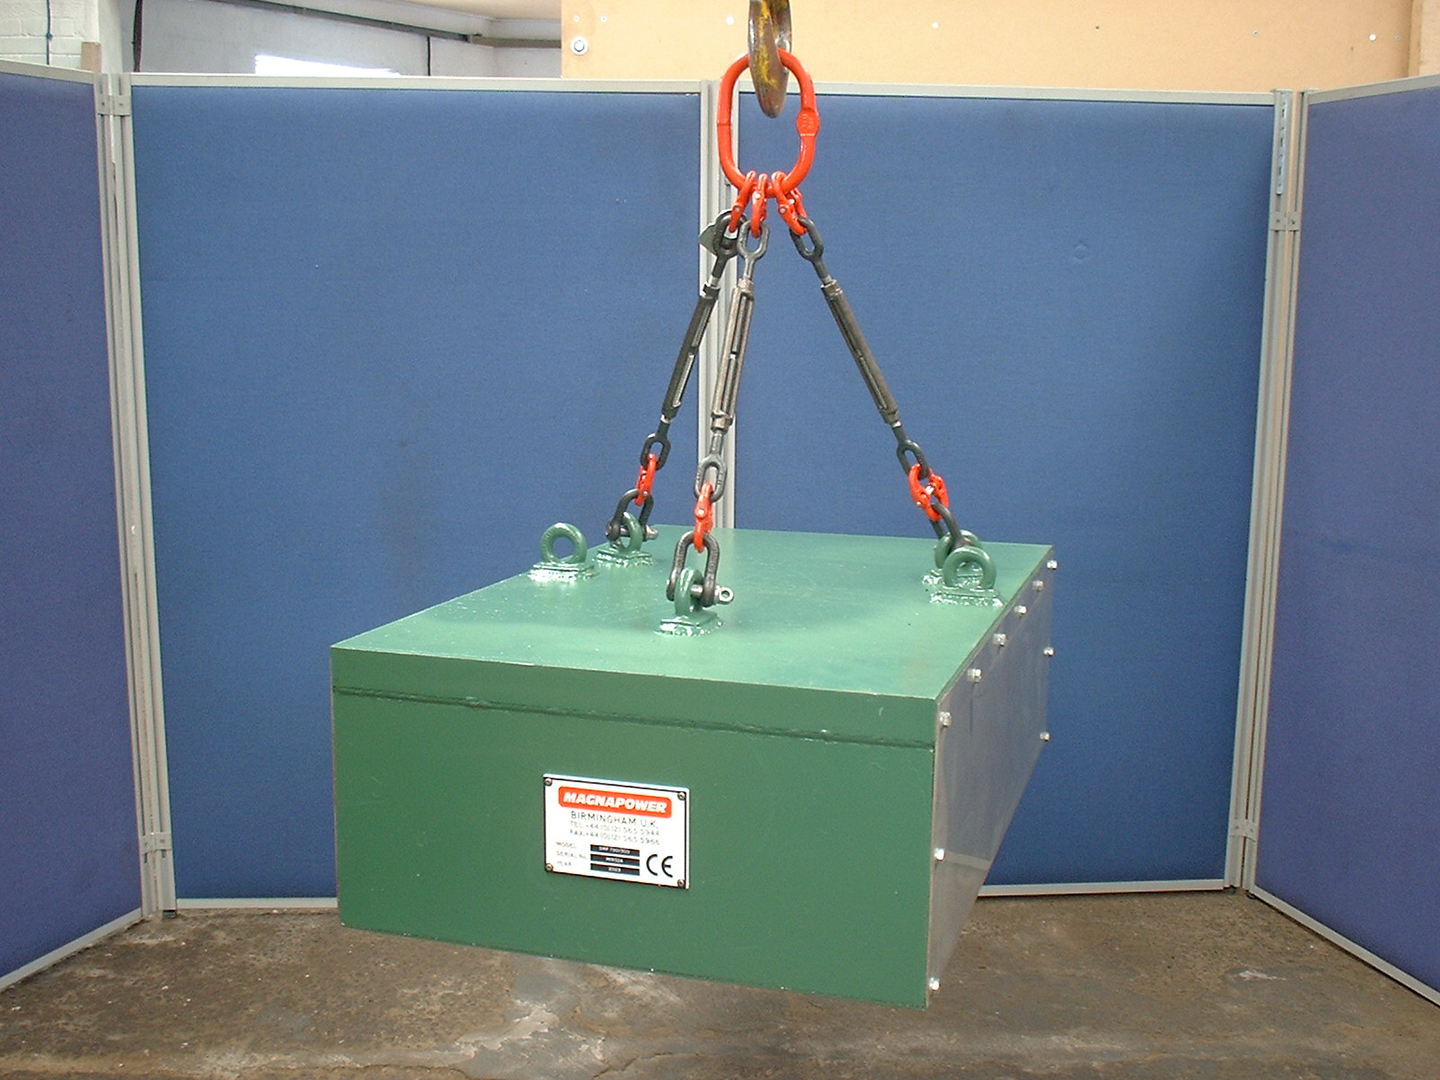 Suspension magnet prior to installation